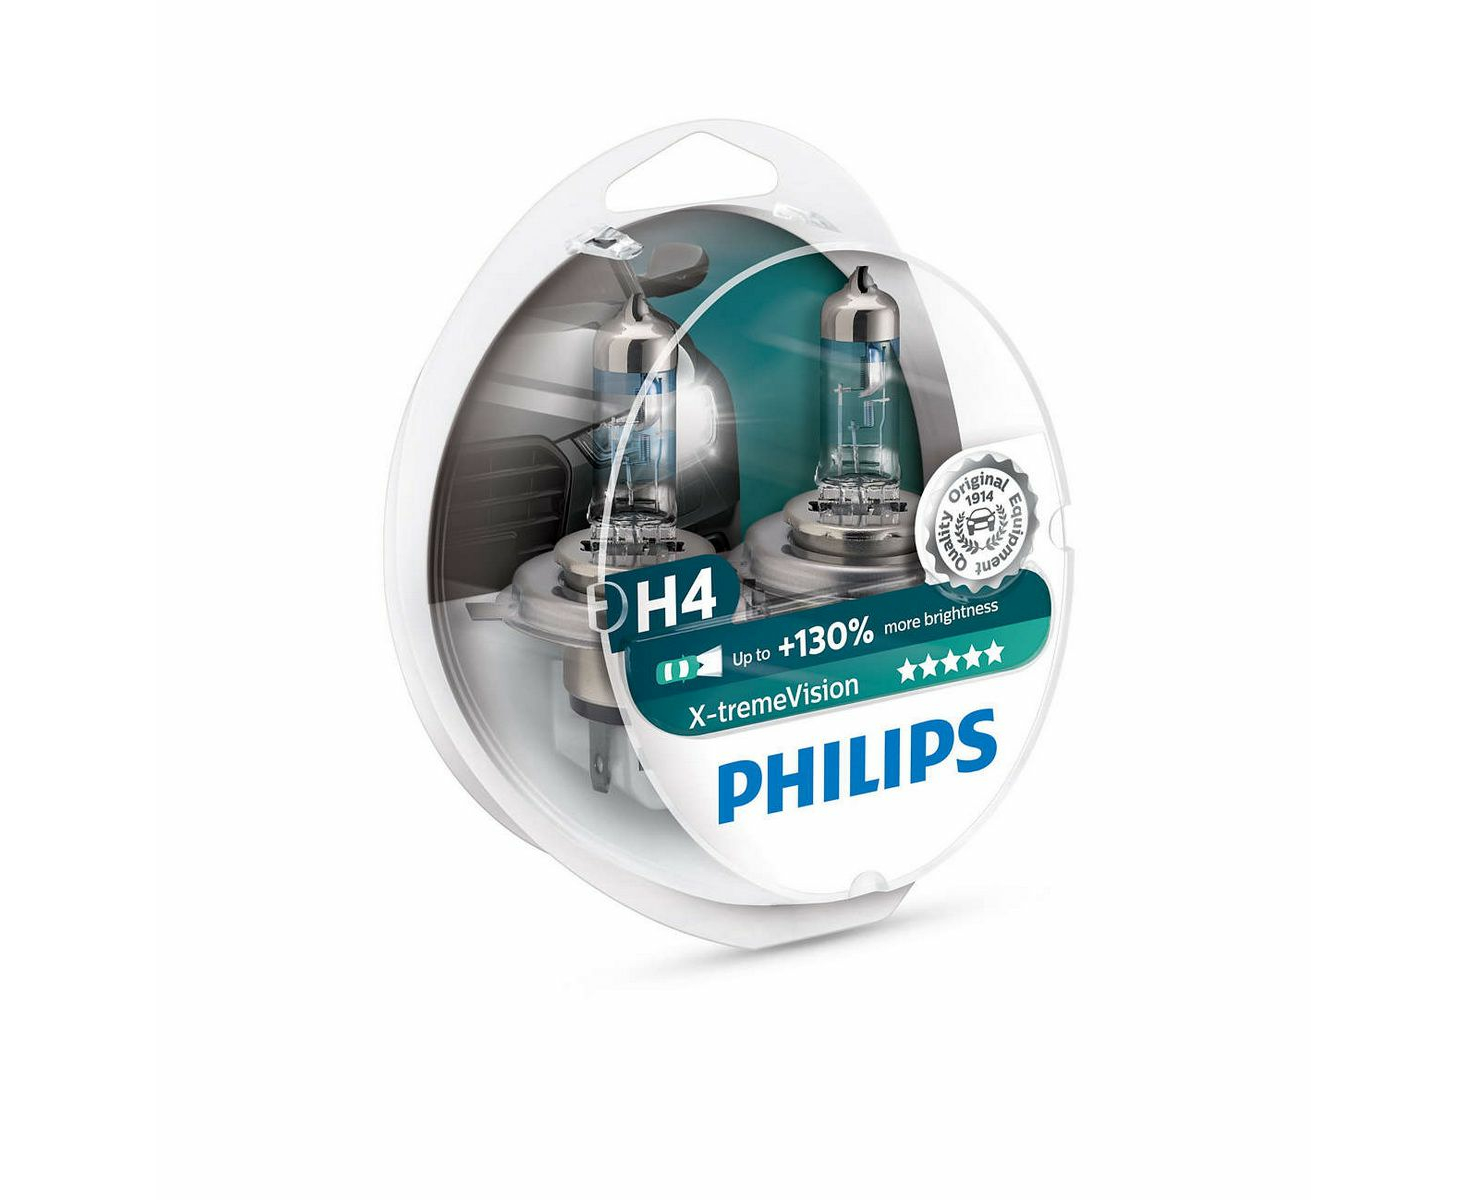 Philips 12342xv+ s2. Лампы н7 Филипс экстрим Вижн. Philips x-TREMEVISION h7. Филипс h7 +130. Лампа филипс н7